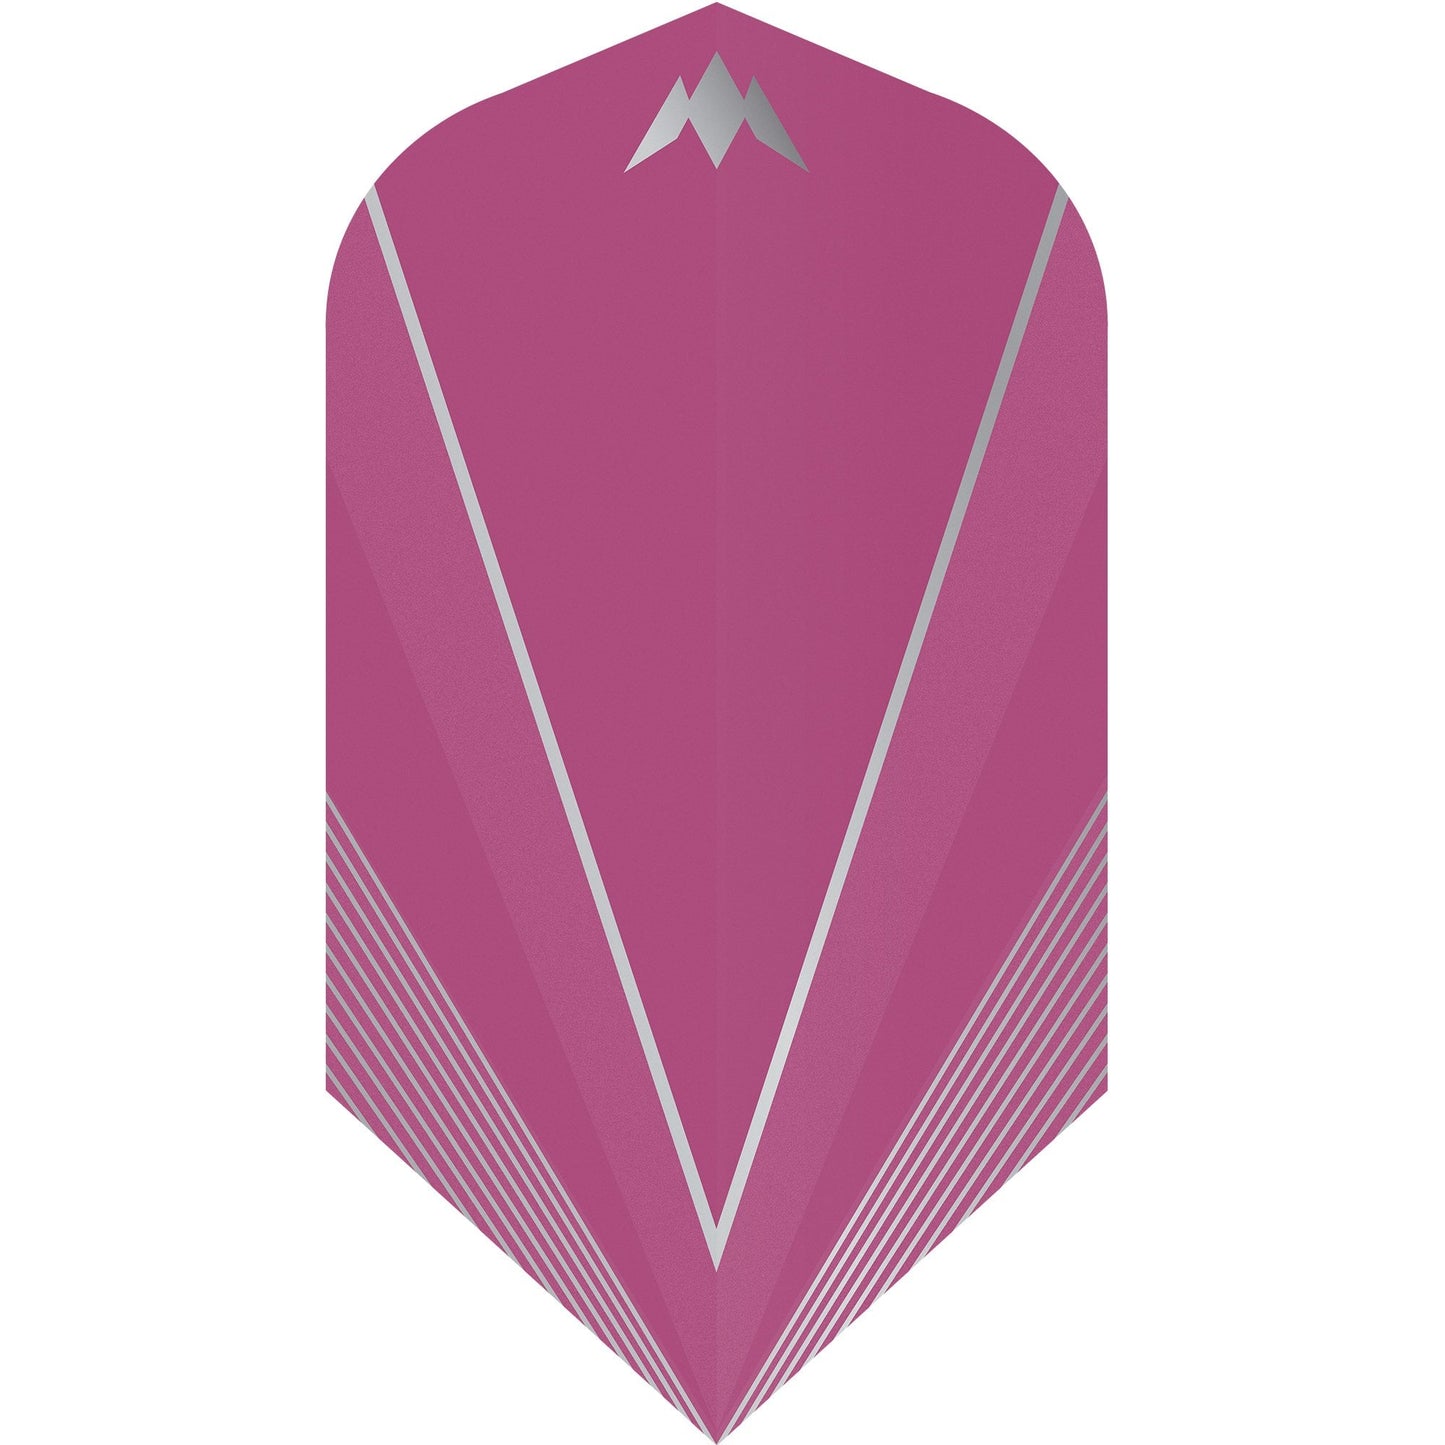 Mission Shades Dart Flights - 100 Micron - Slim Pink